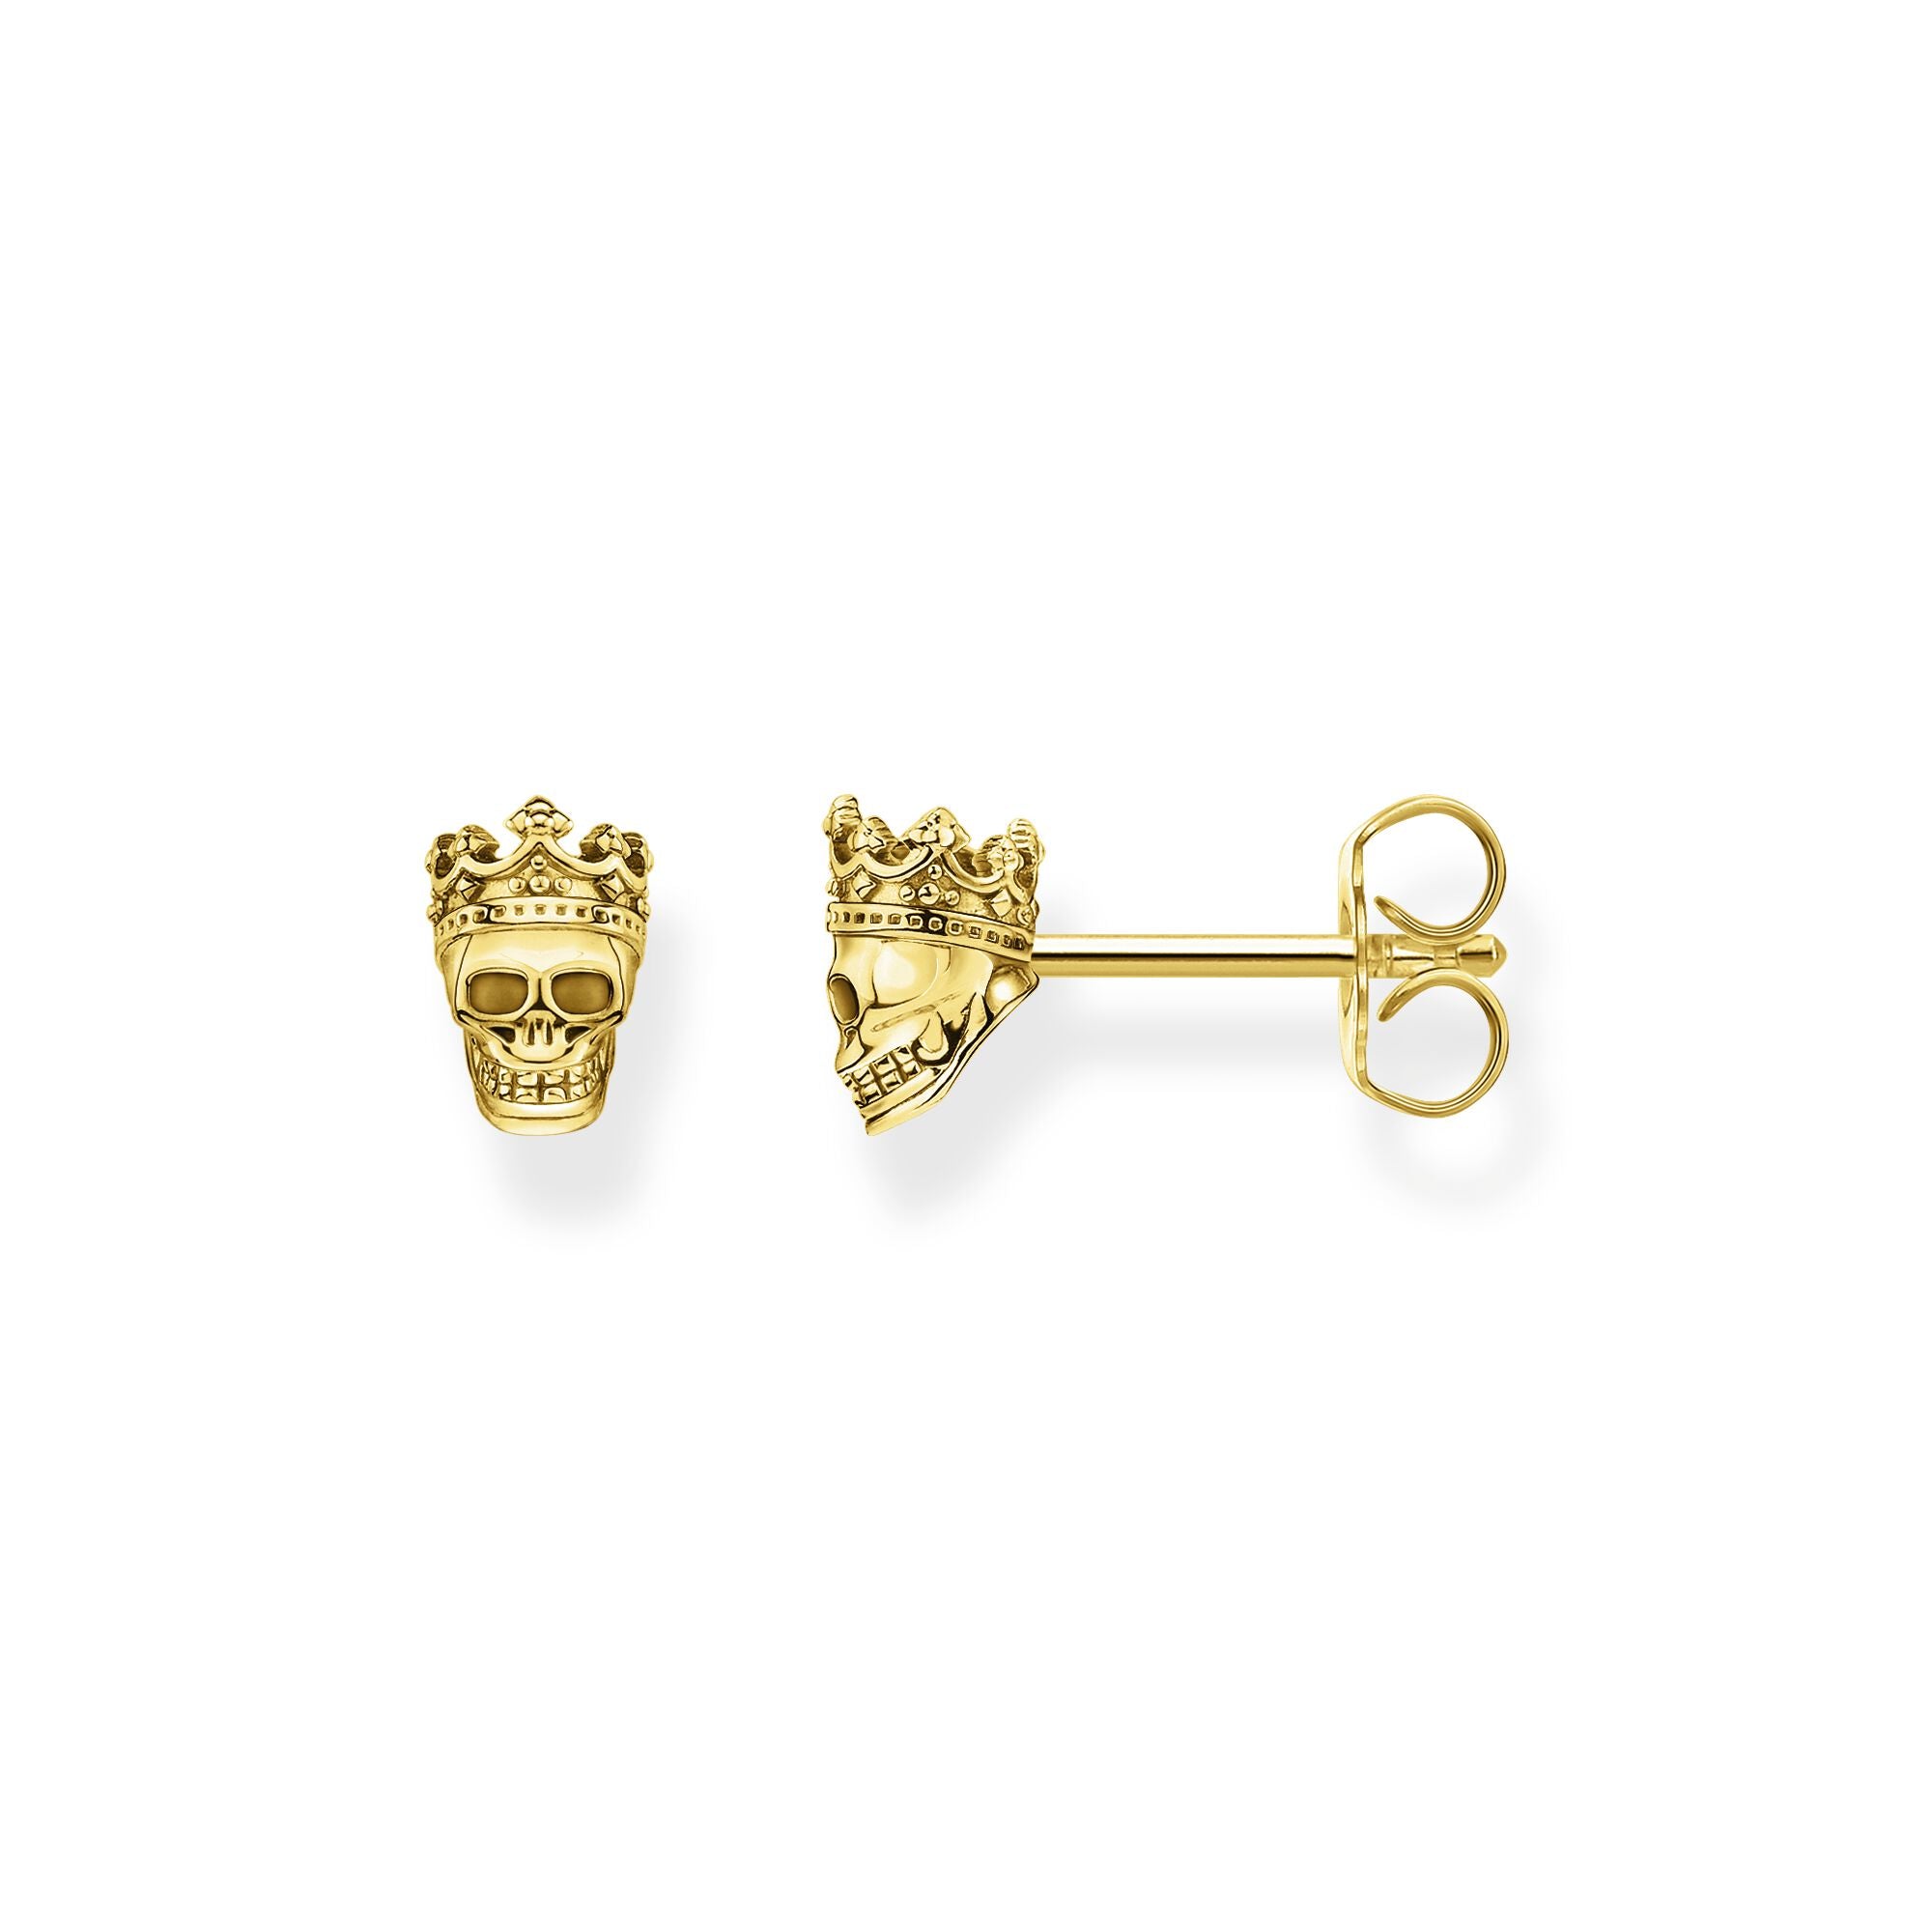 Thomas Sabo 18k Gold Plated Skull Ear Studs